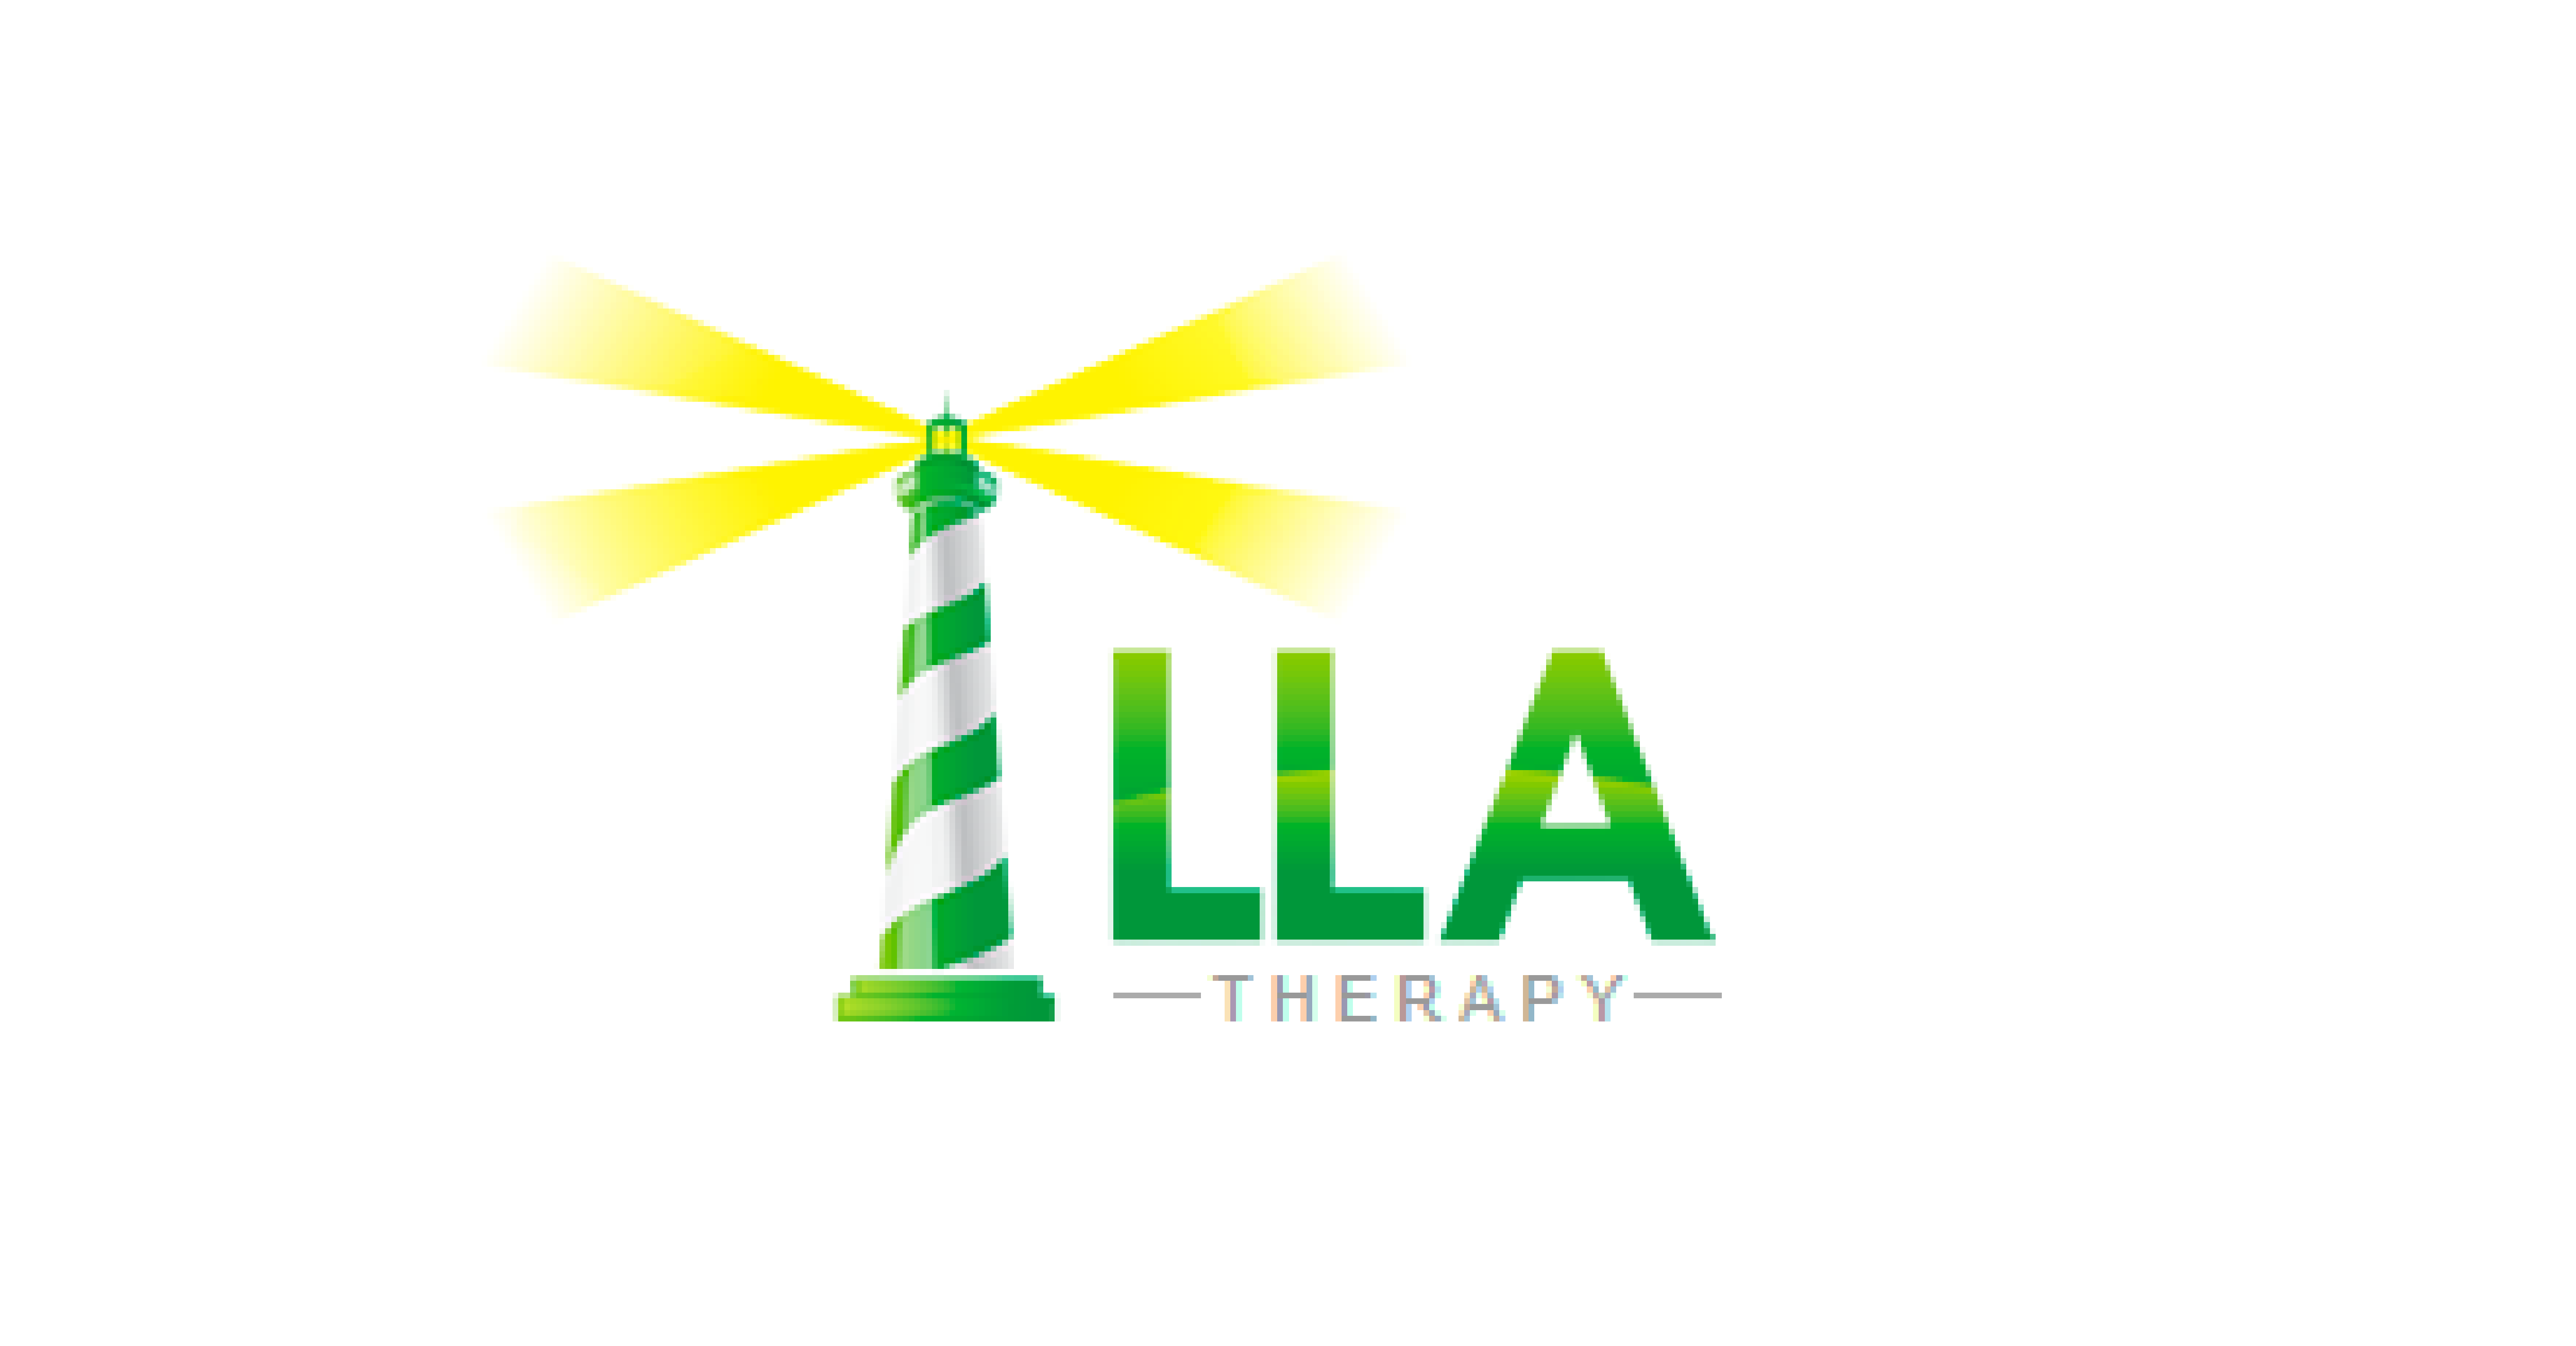 LLA Therapy logo